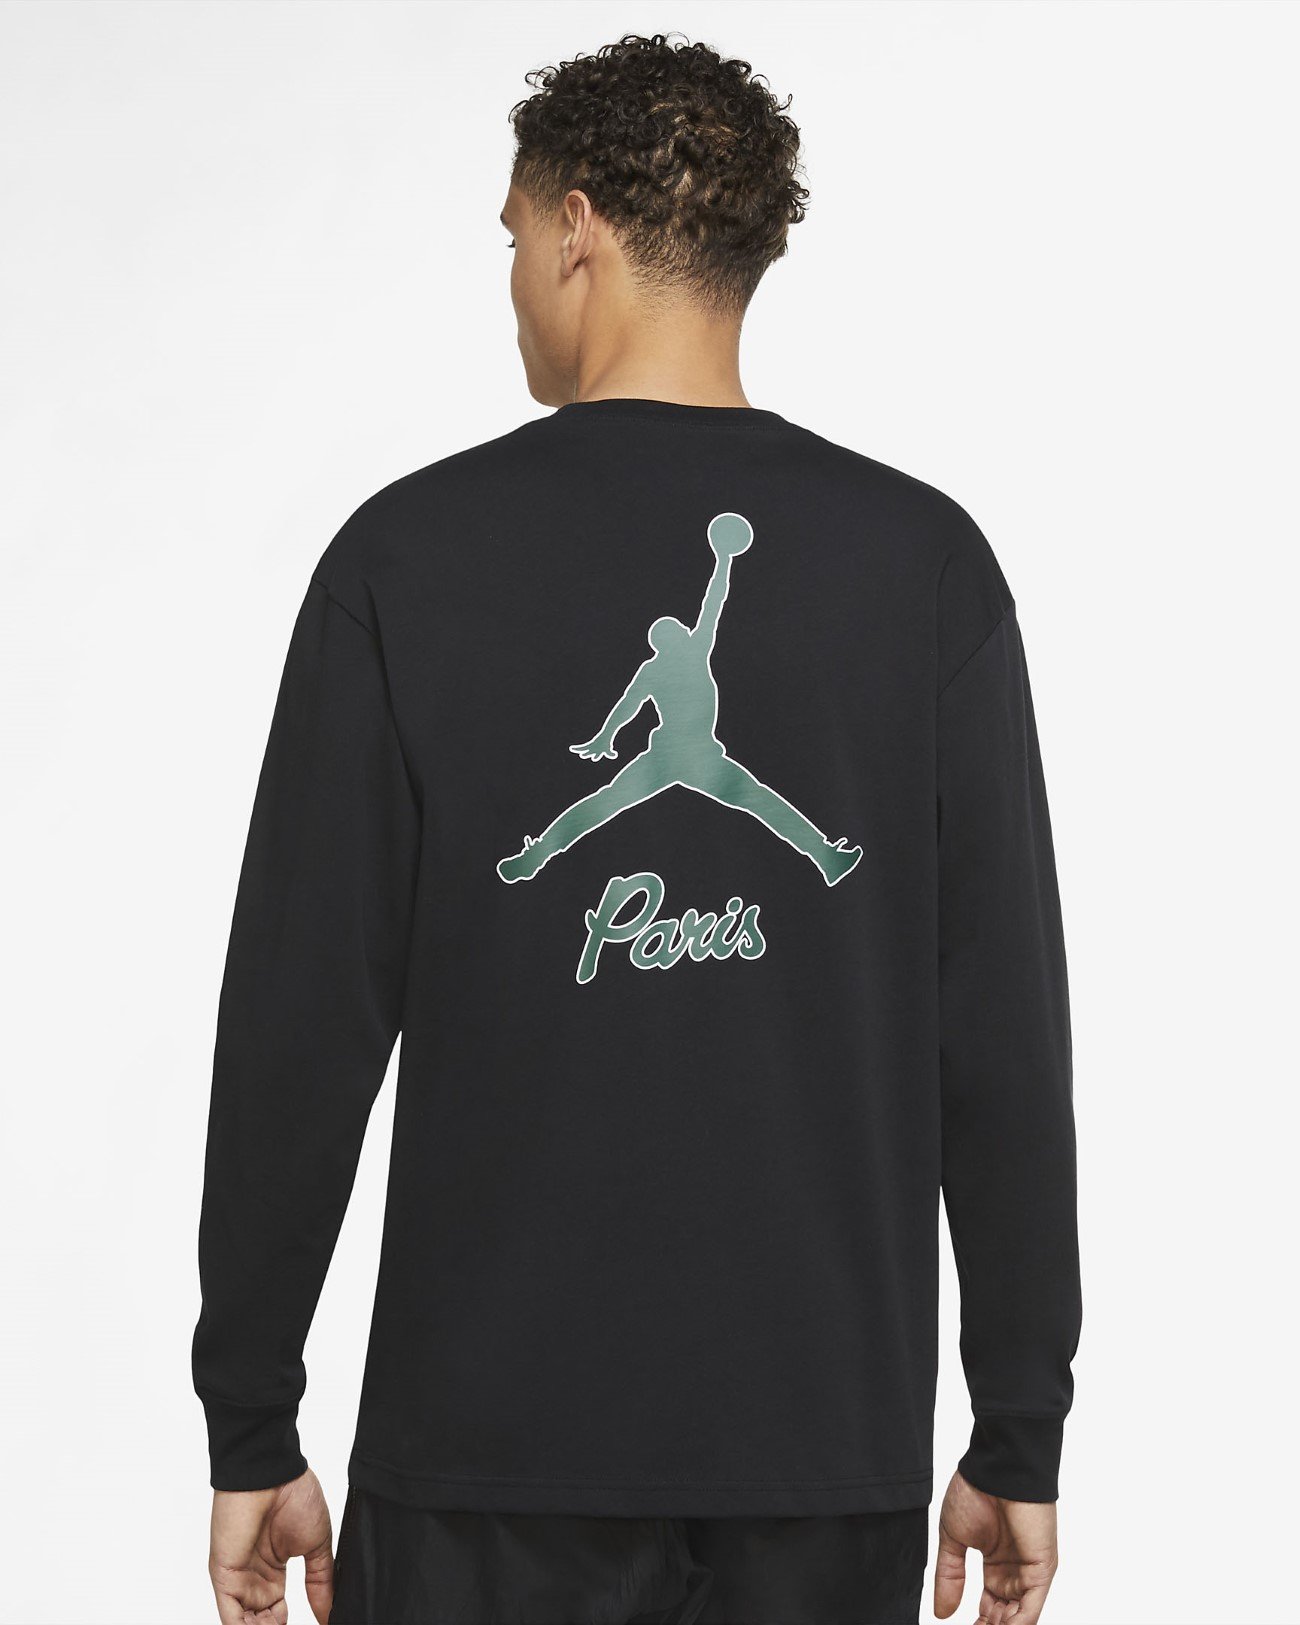 PSG x Jordan Brand Collection Lifestyle